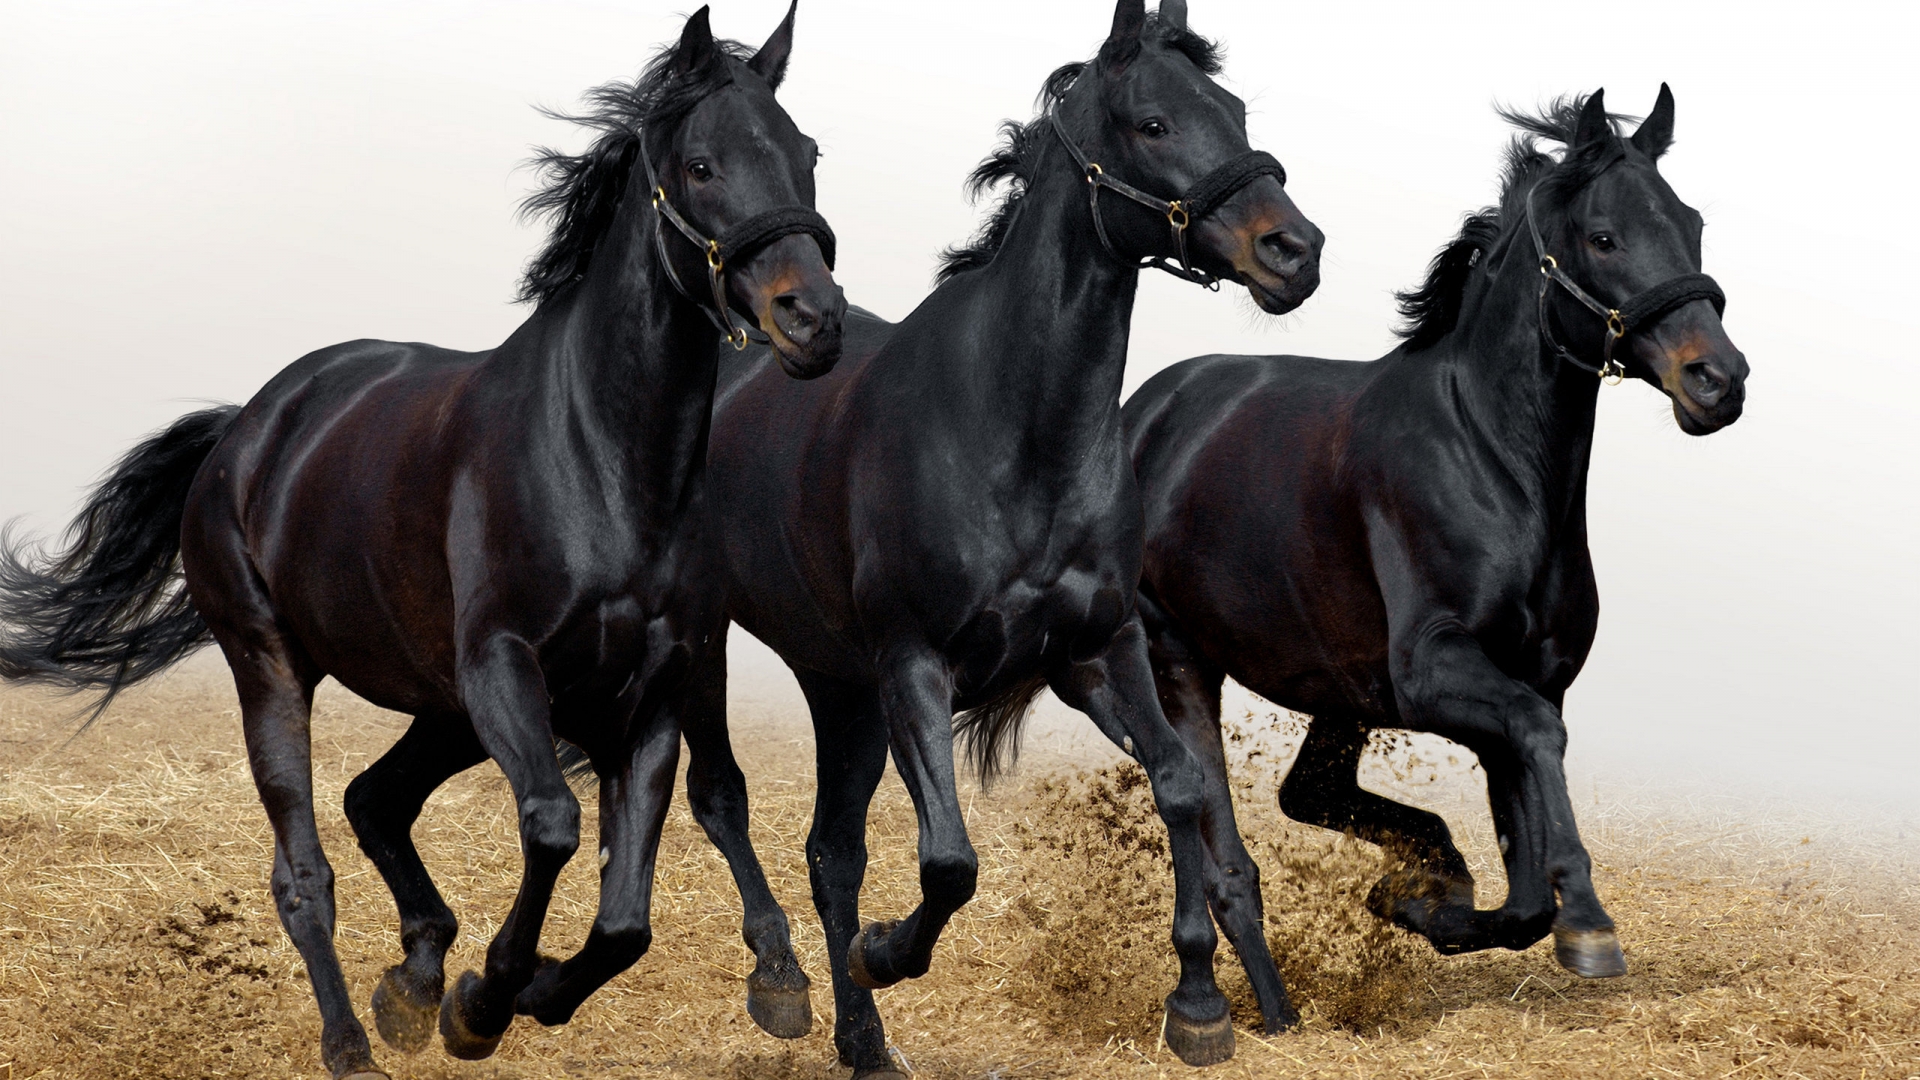 Three Black Horses for 1920 x 1080 HDTV 1080p resolution